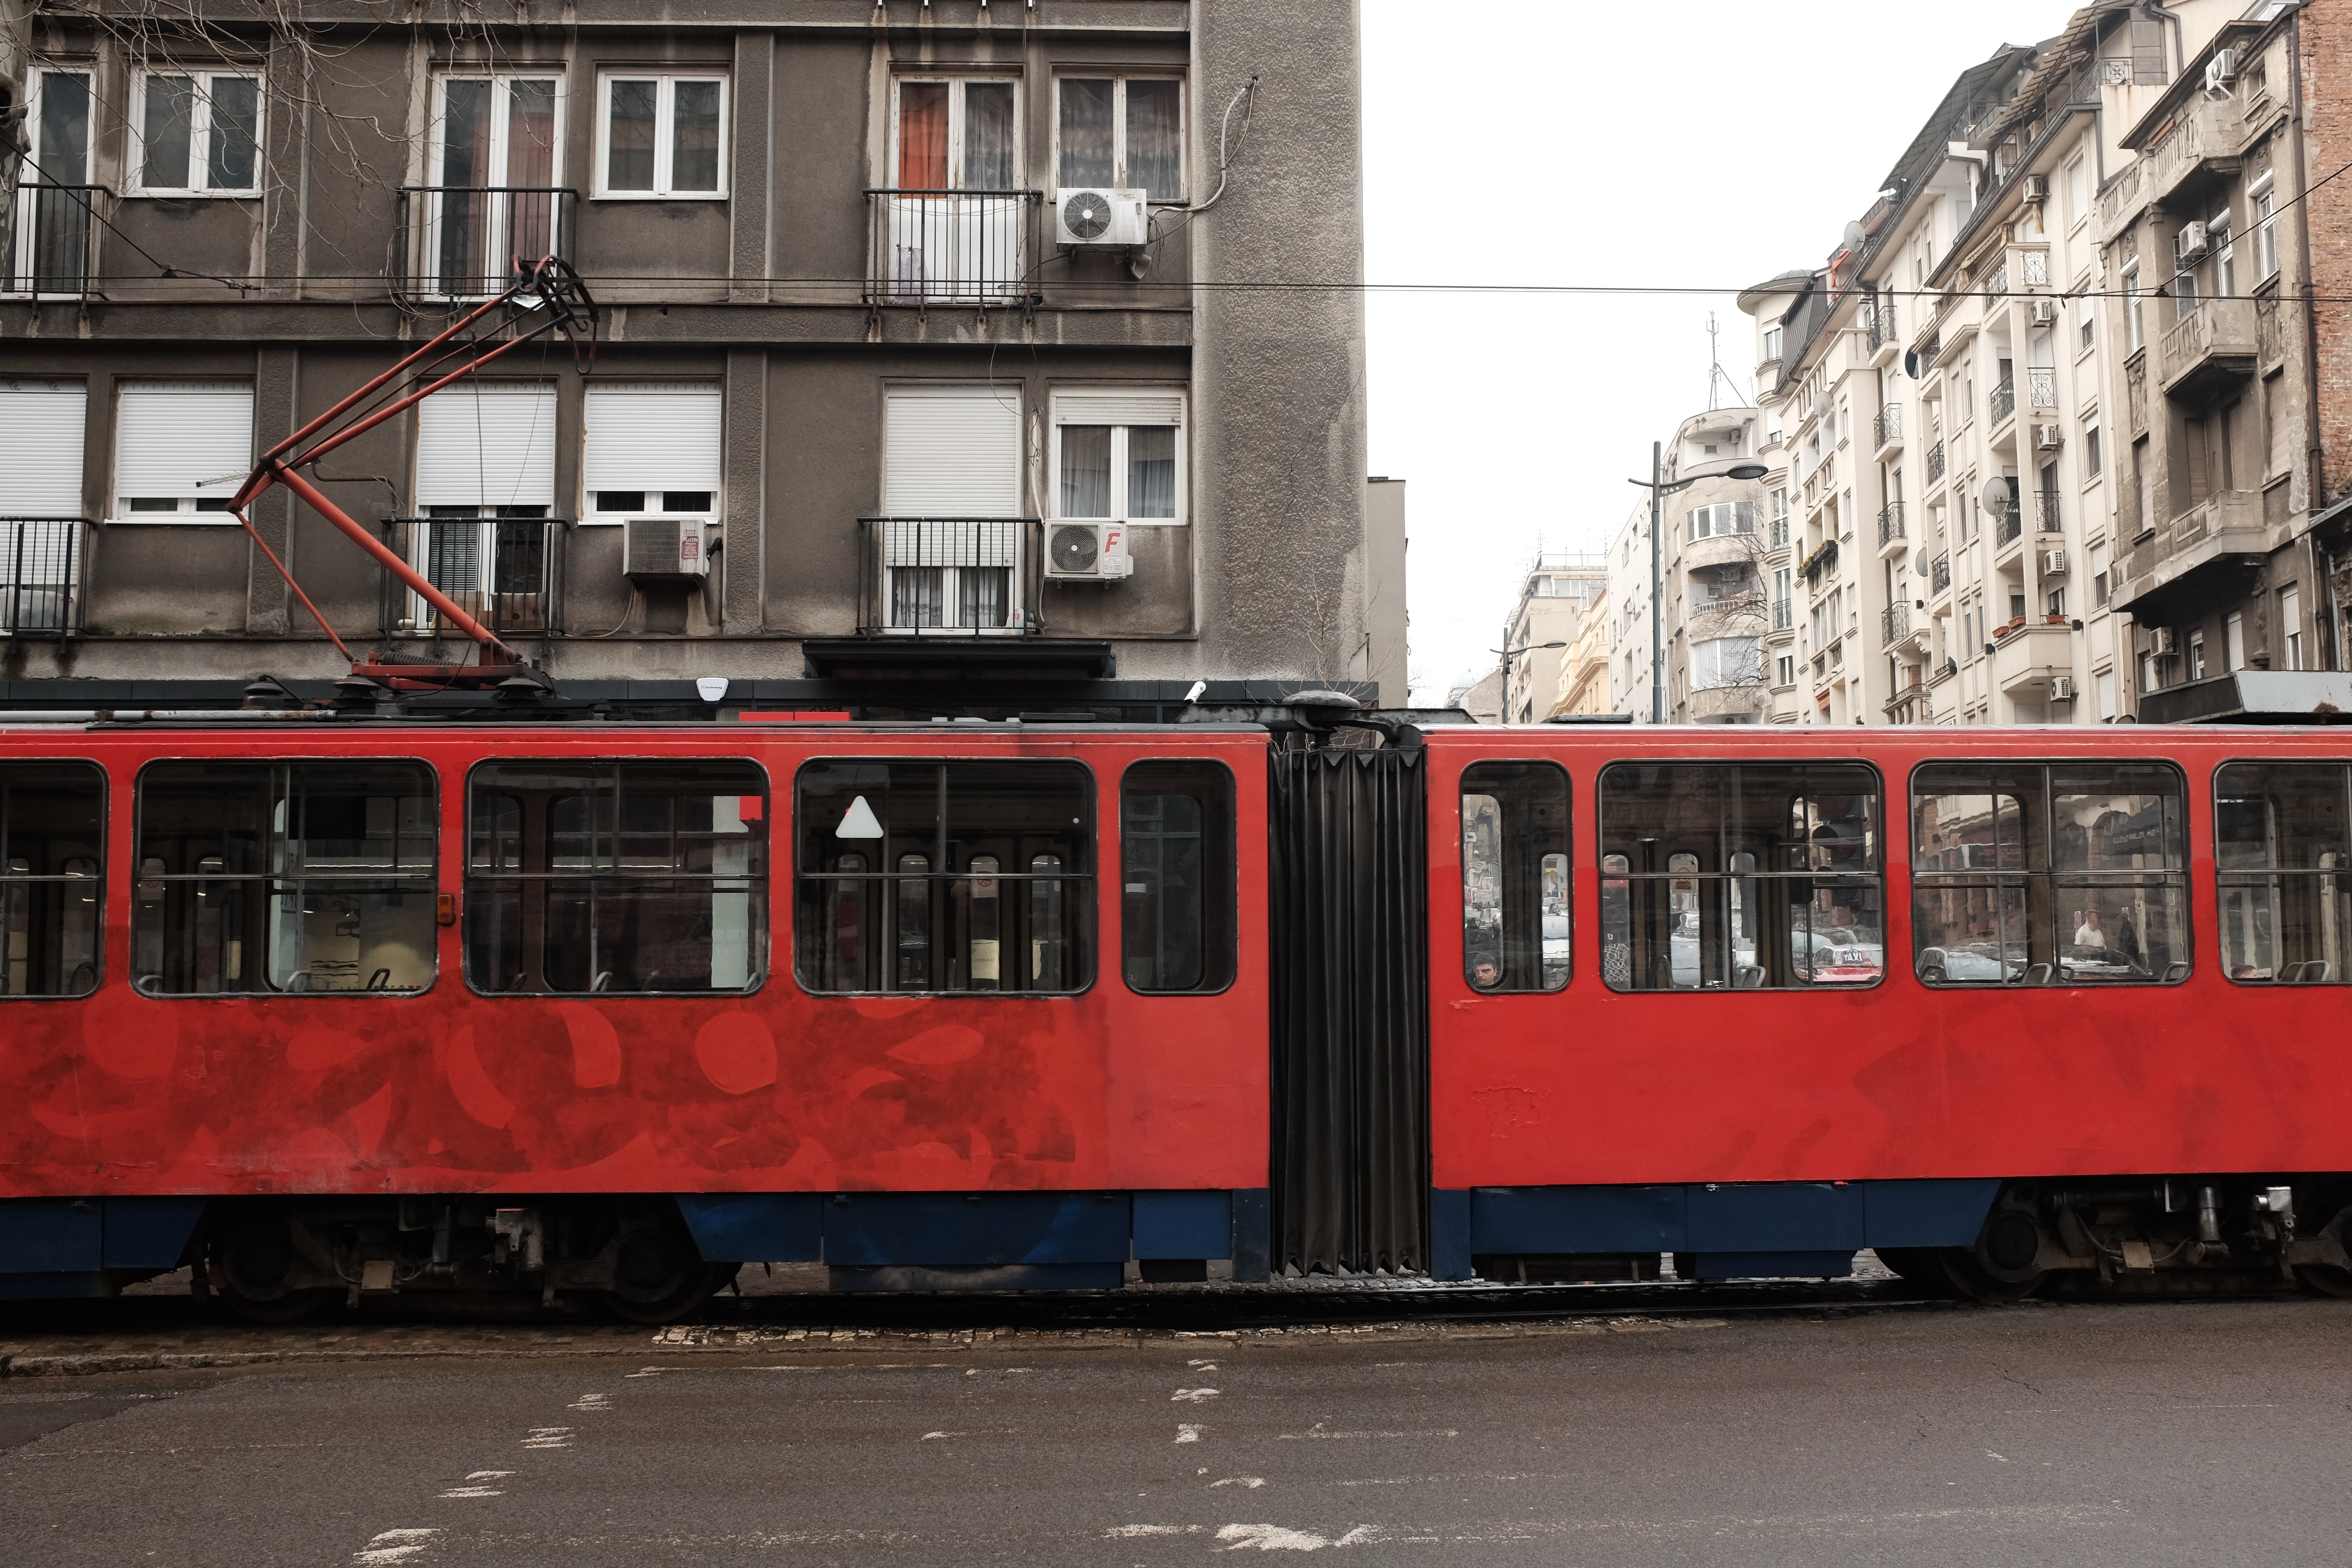 A bright red streetcar going through a city. 